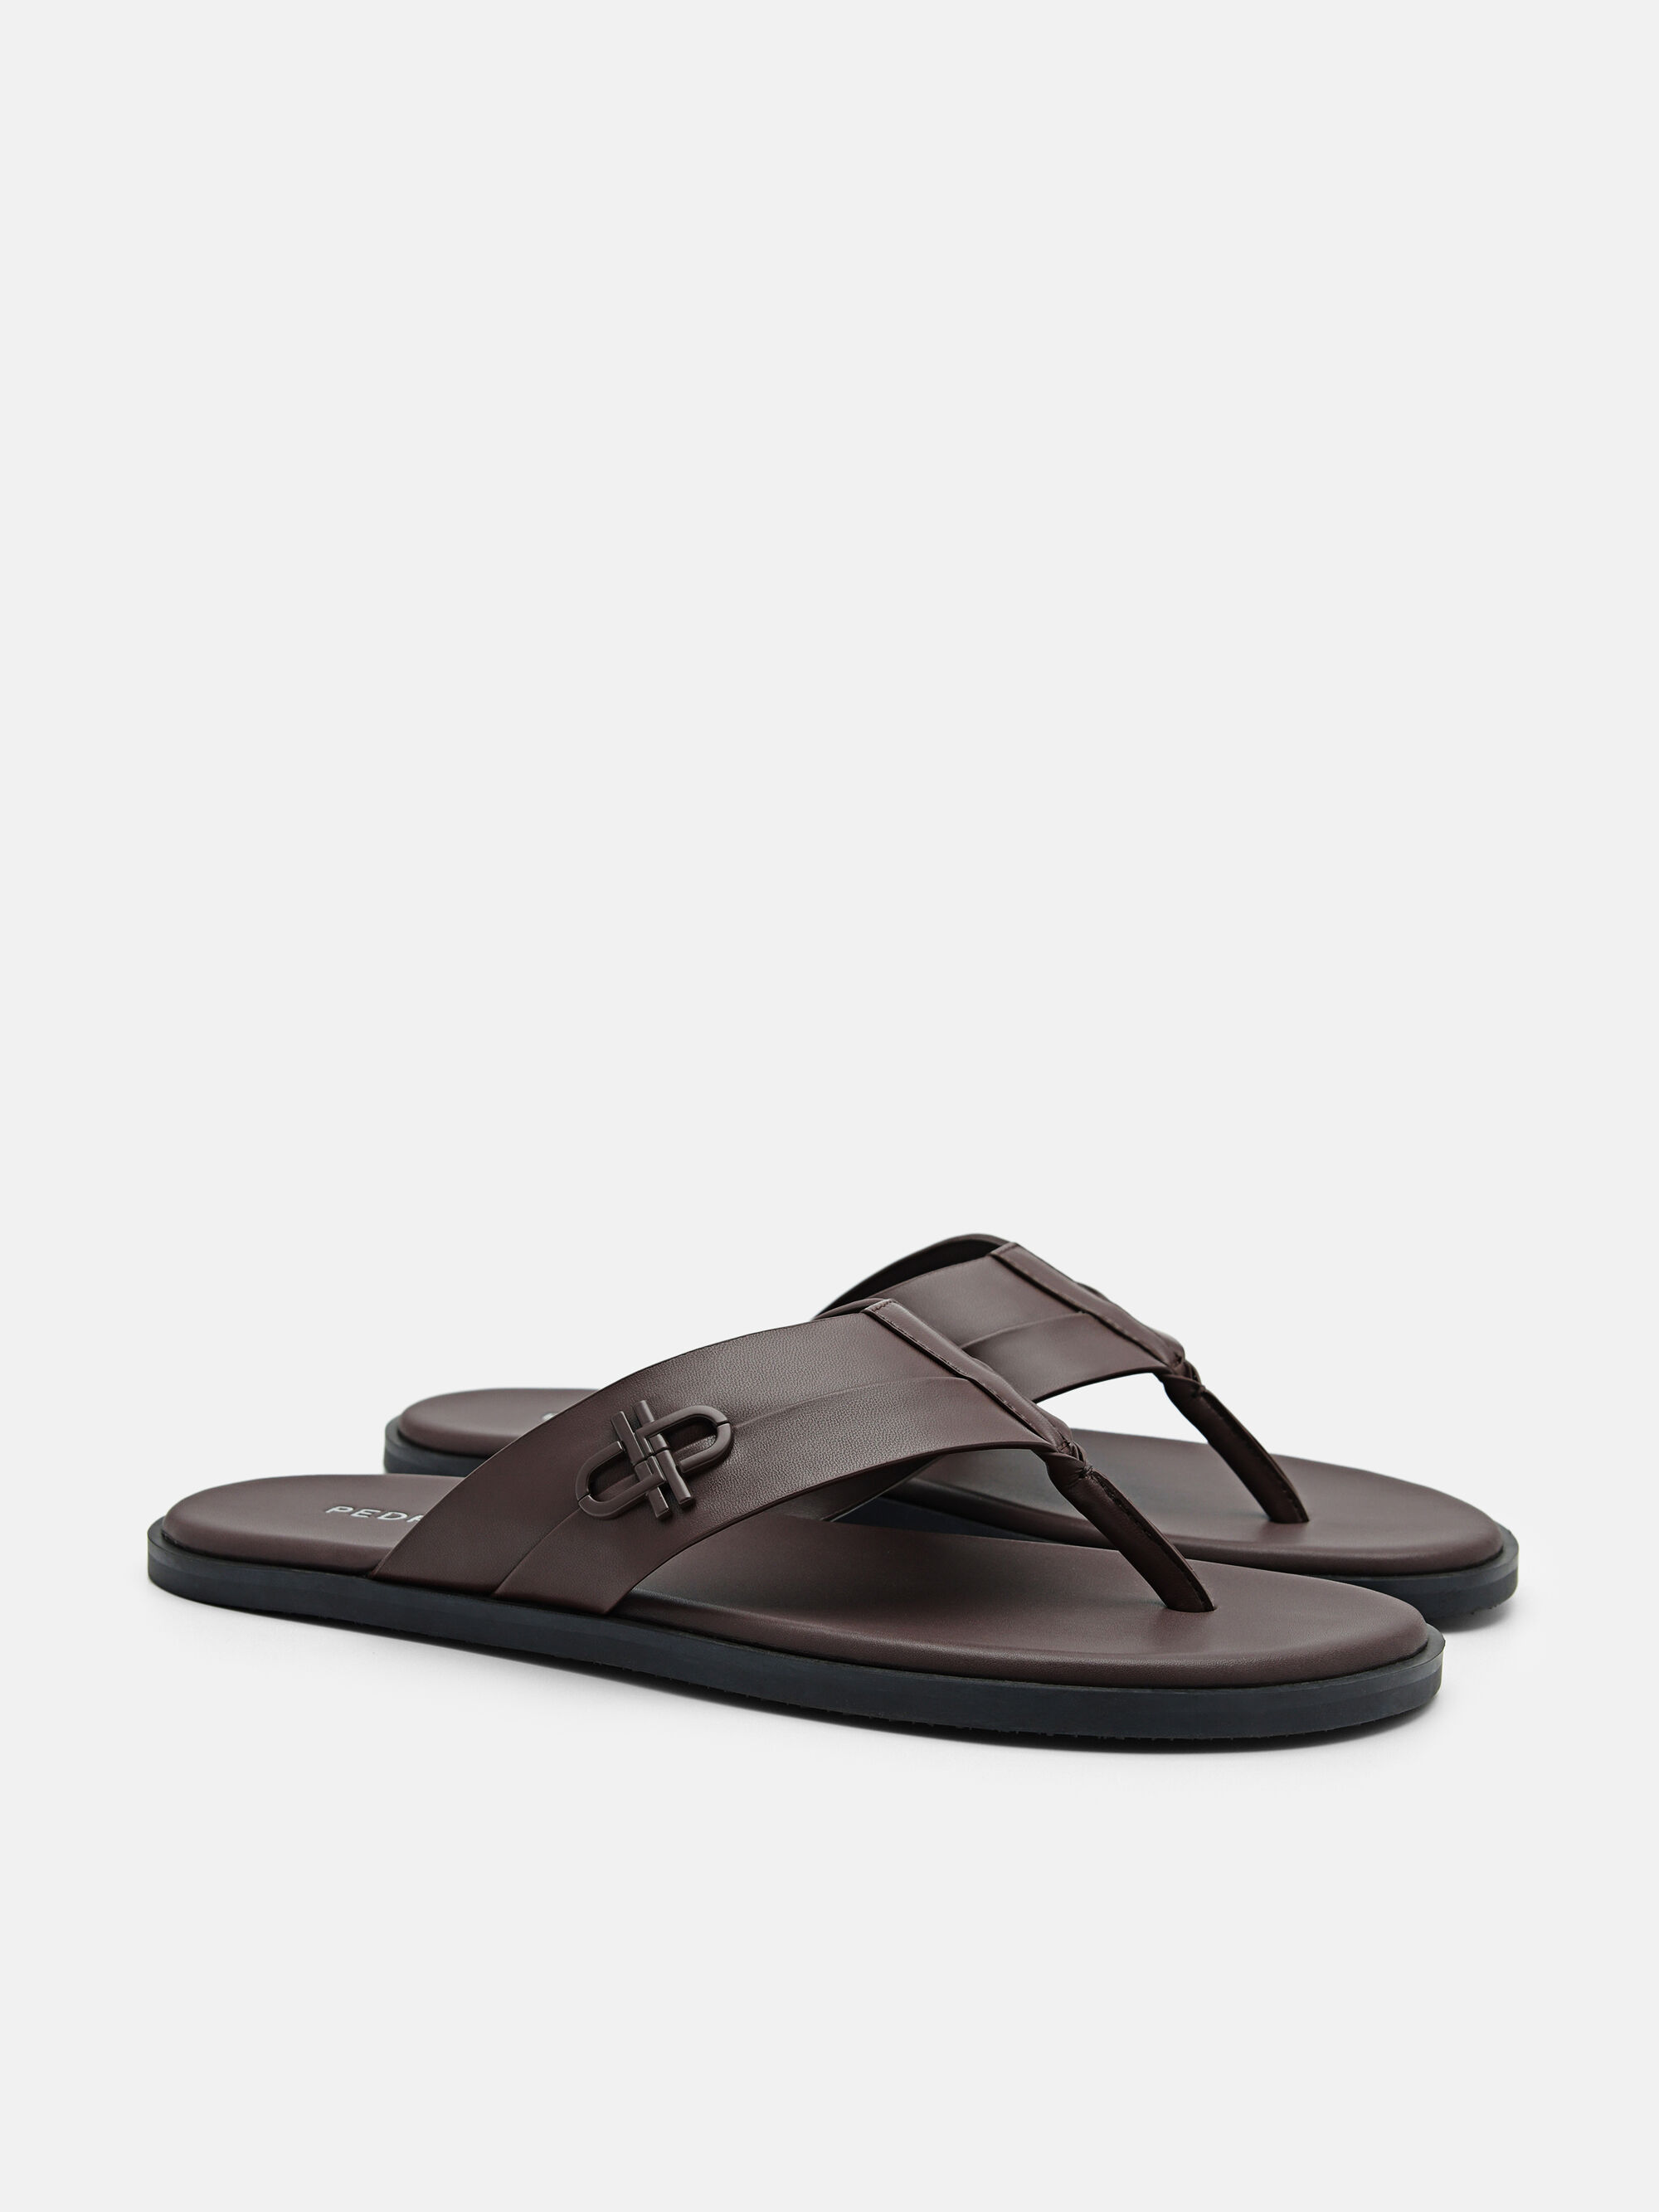 PEDRO Icon Thong Sandals, Dark Brown